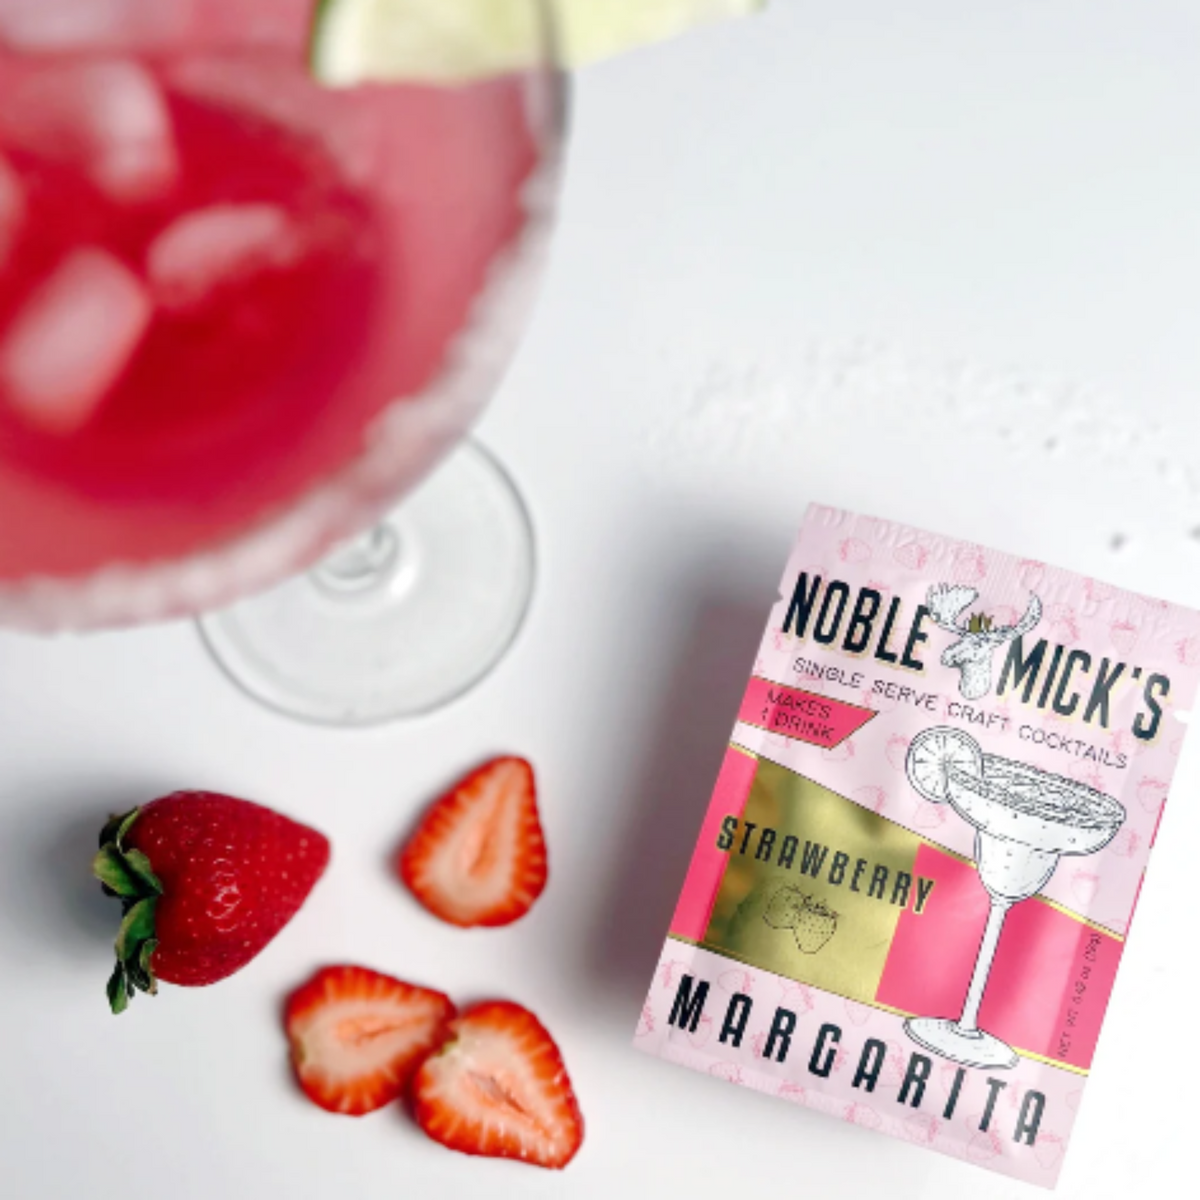 Strawberry Margarita - single serve craft cocktails